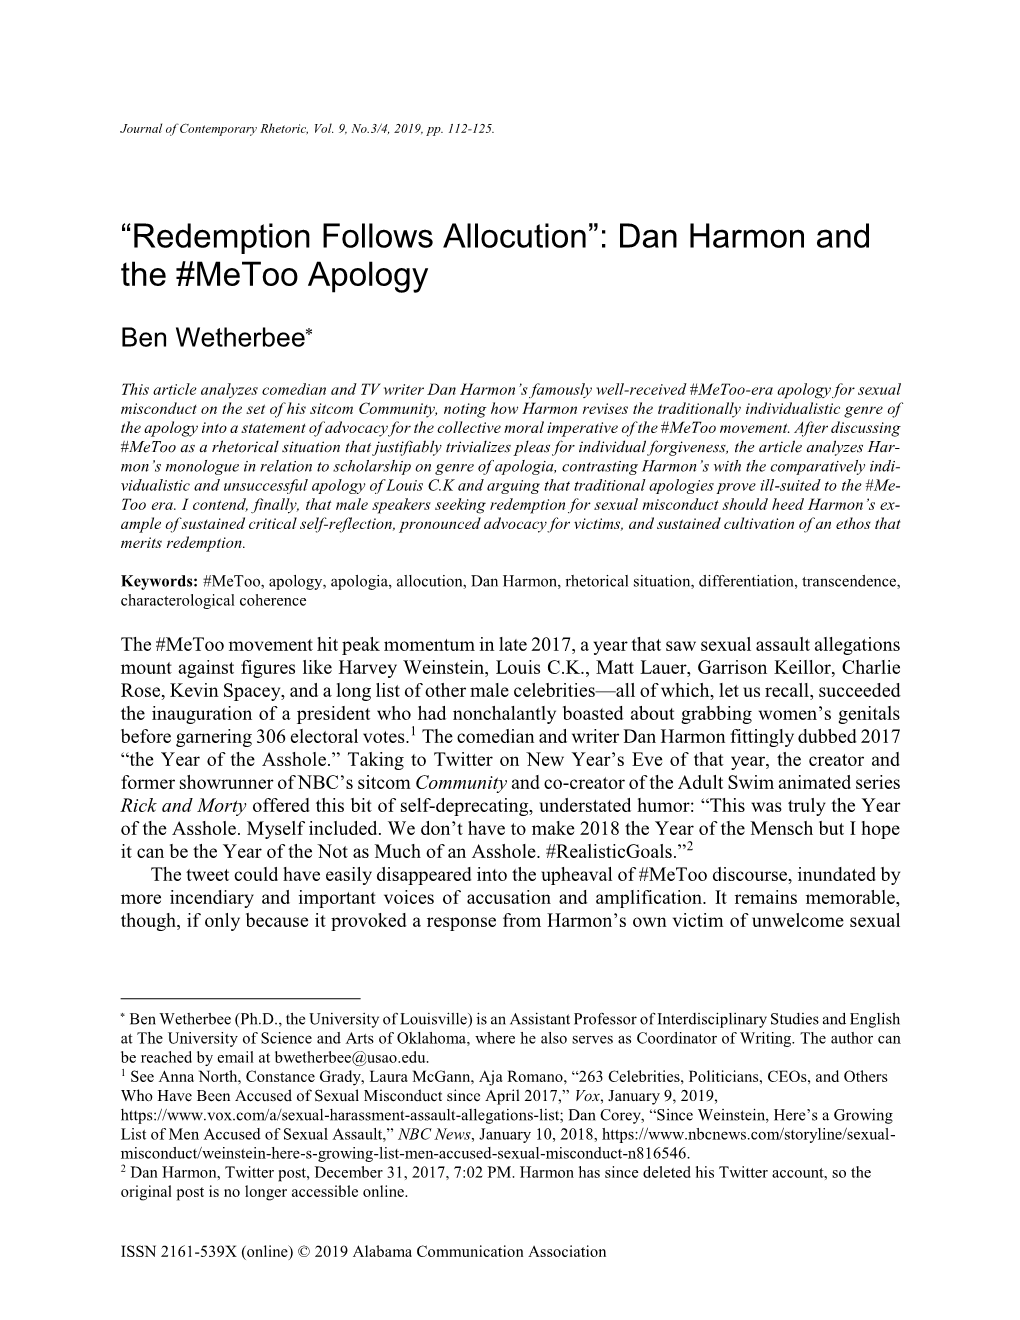 Dan Harmon and the #Metoo Apology